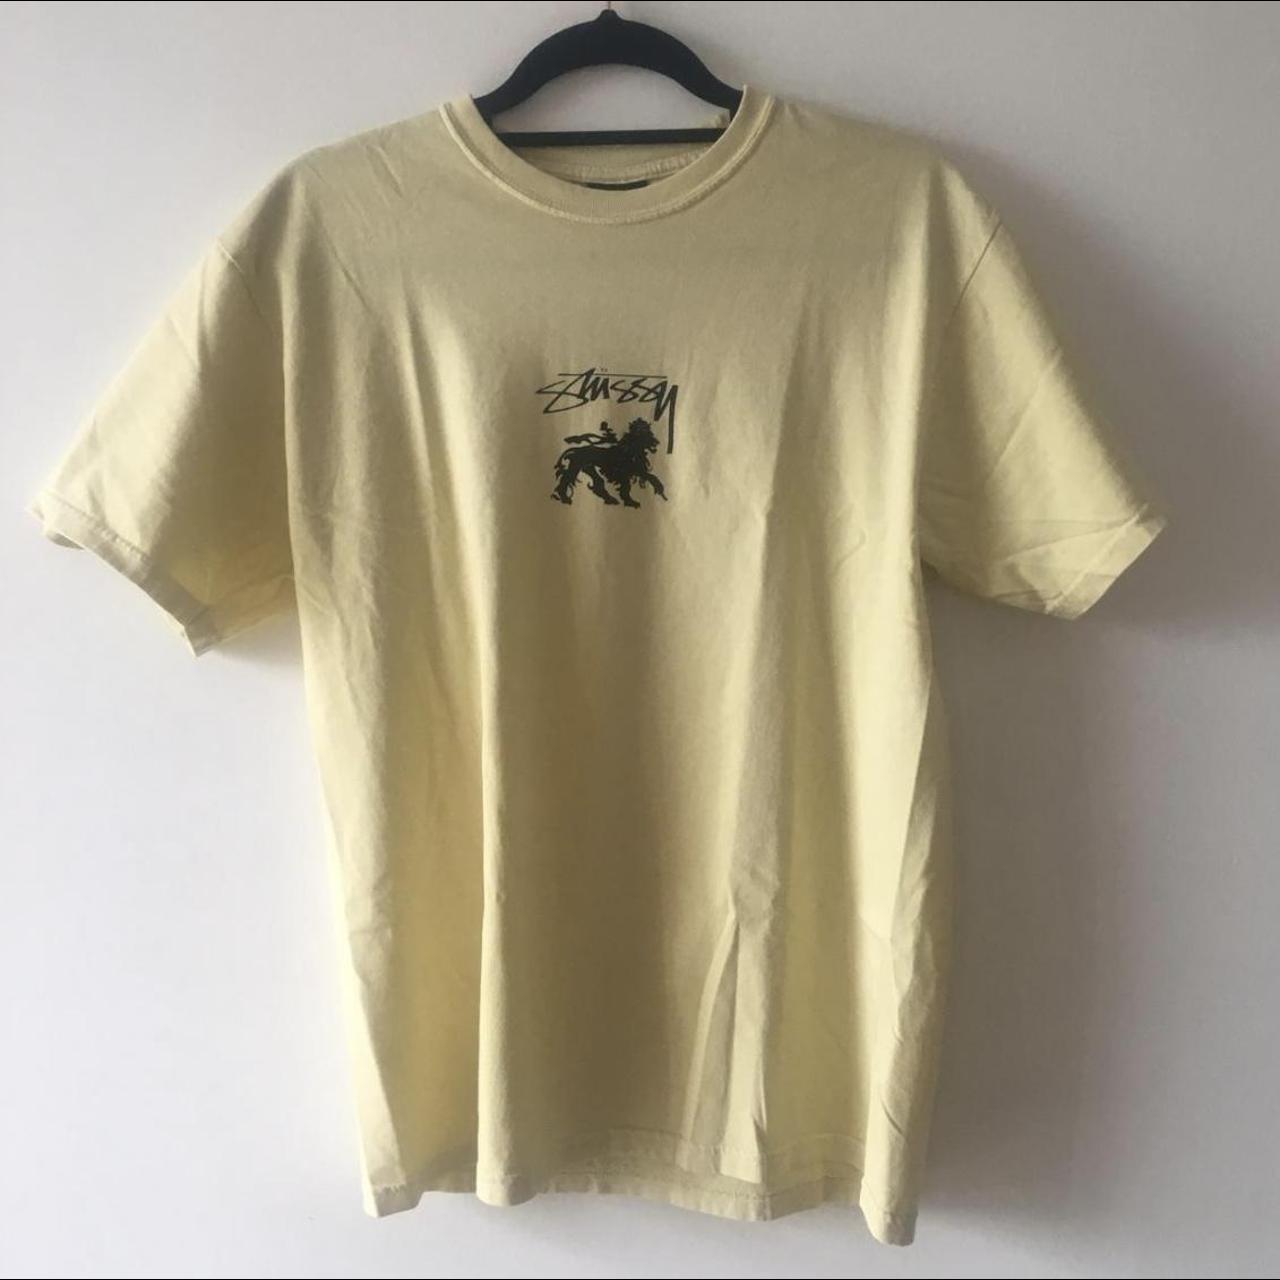 Stussy lion tee shirt yellow (pale) - Depop